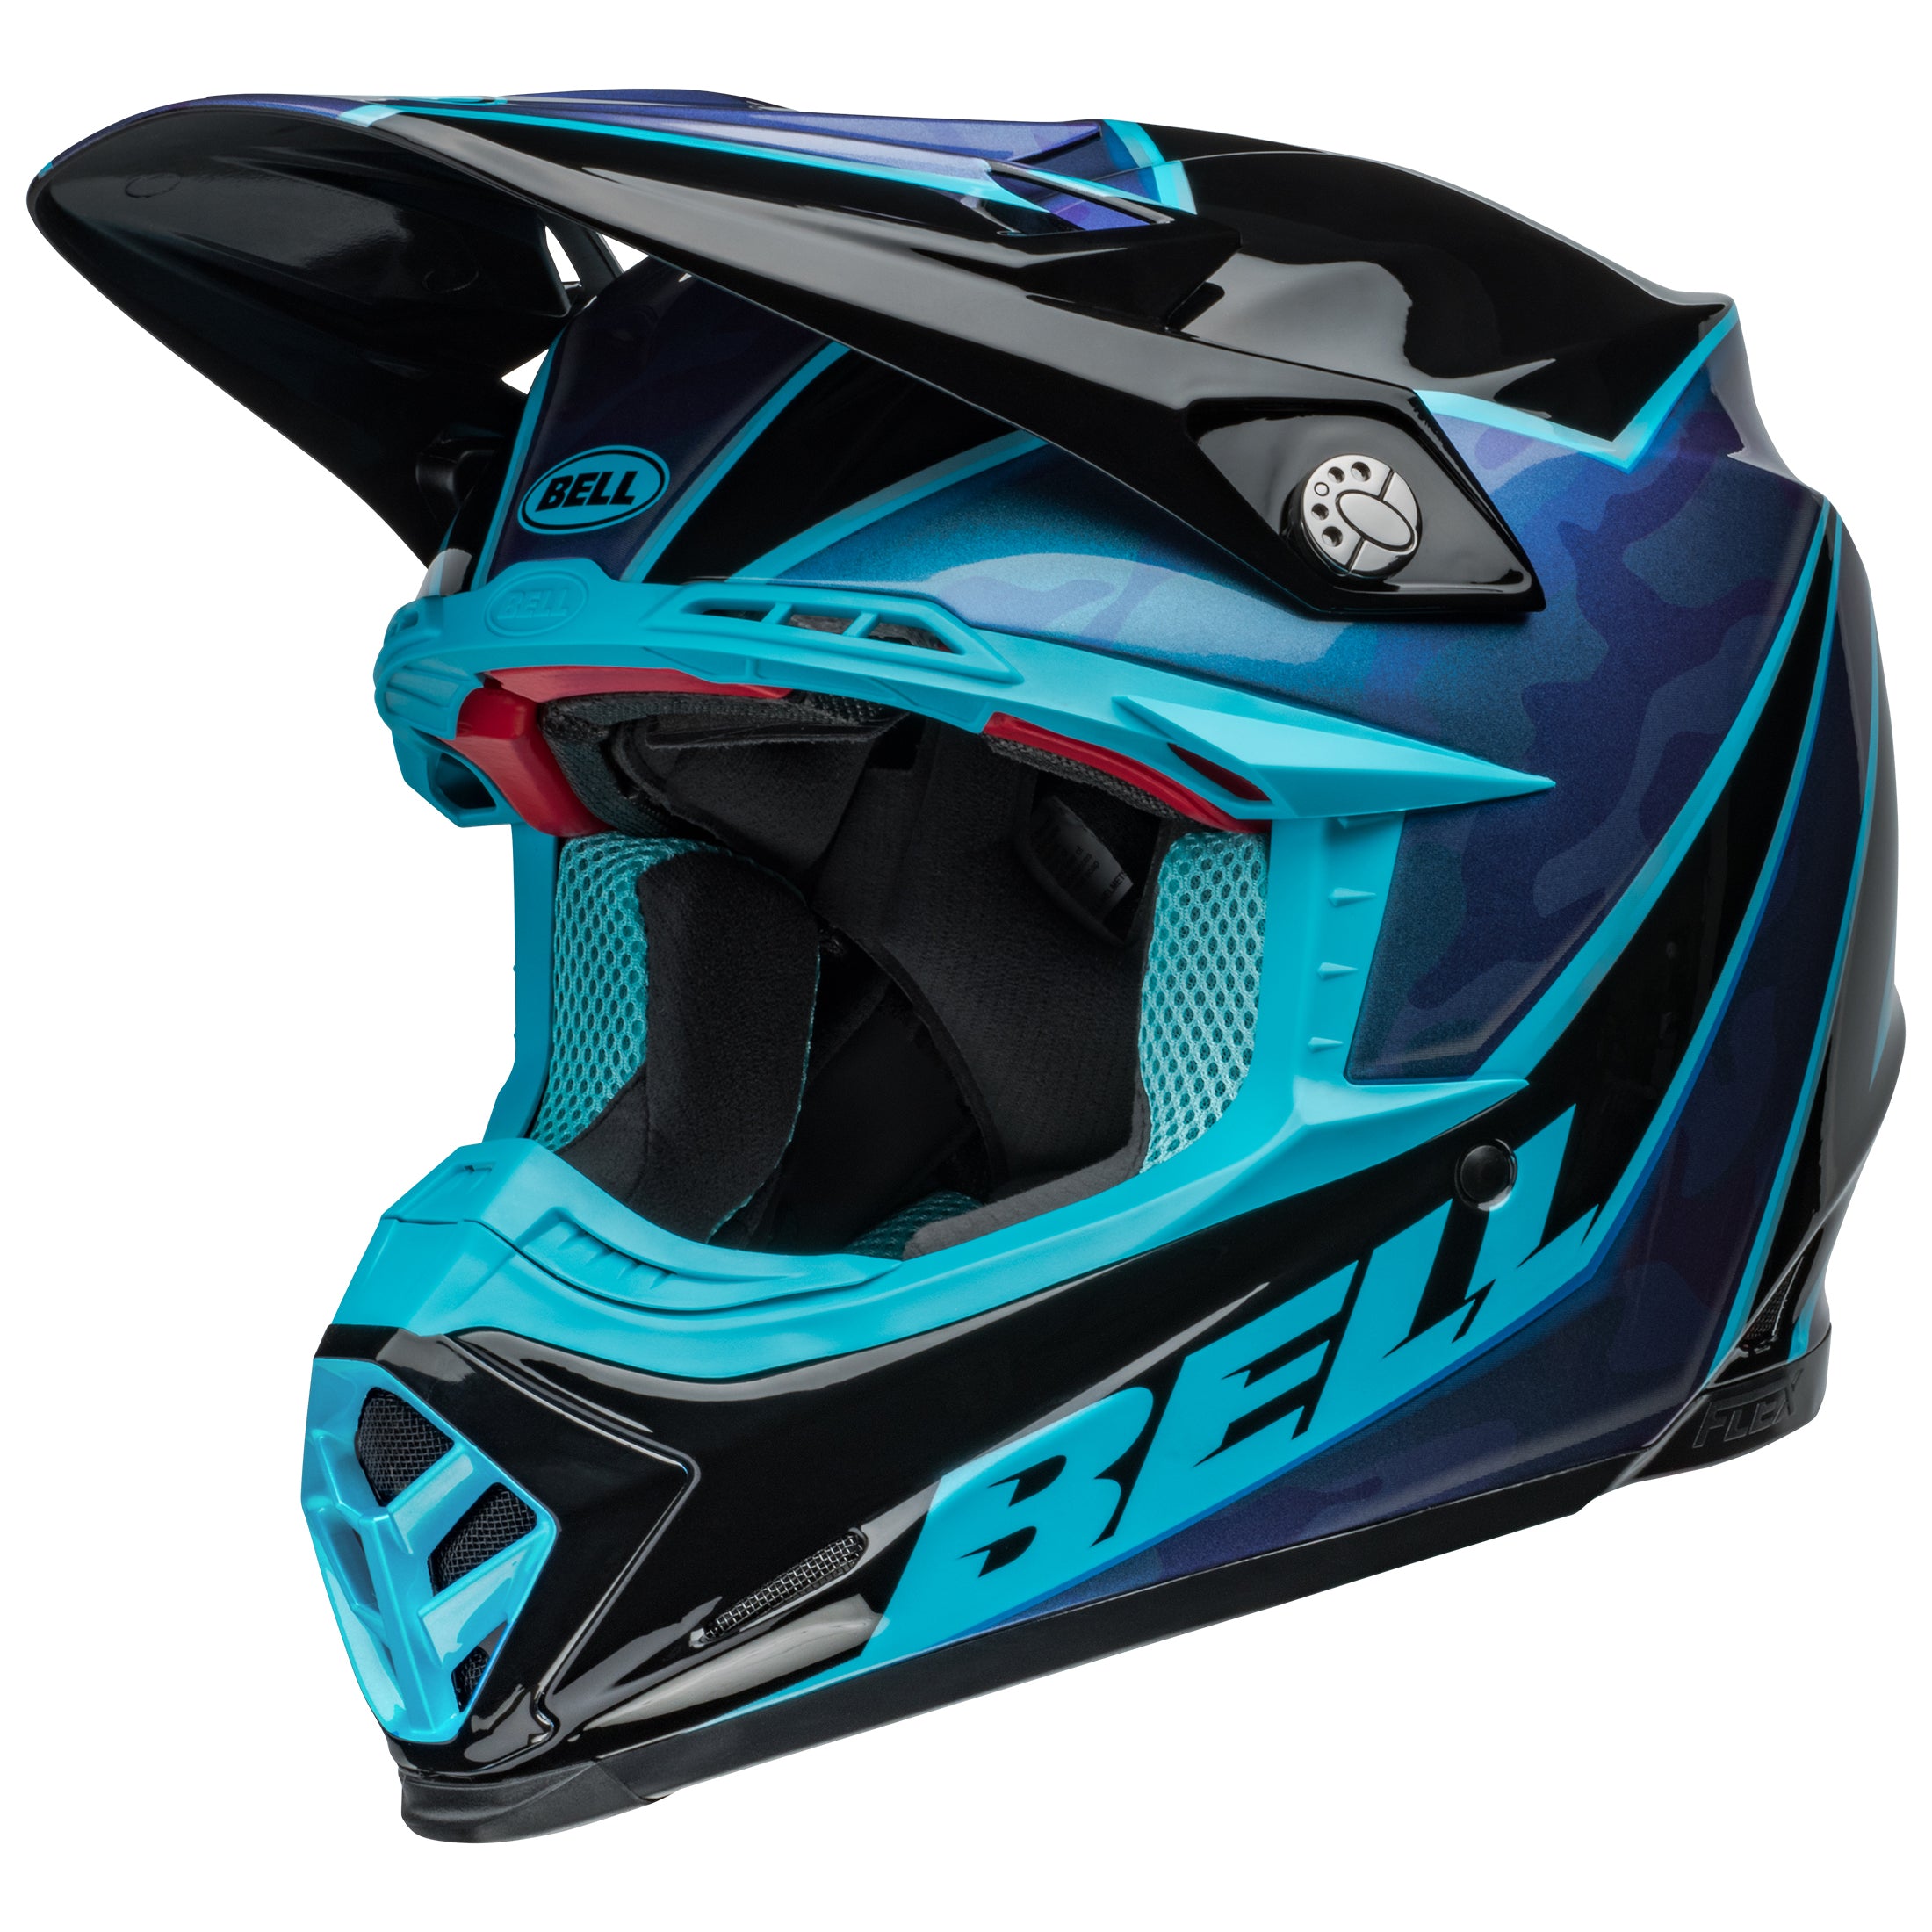 Bell MX 2024 Moto-9S Flex Adult Helmet in Sprite Black and Blue color scheme